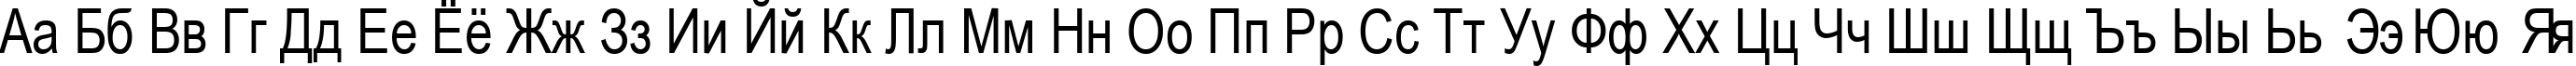 Пример написания русского алфавита шрифтом Arial80n